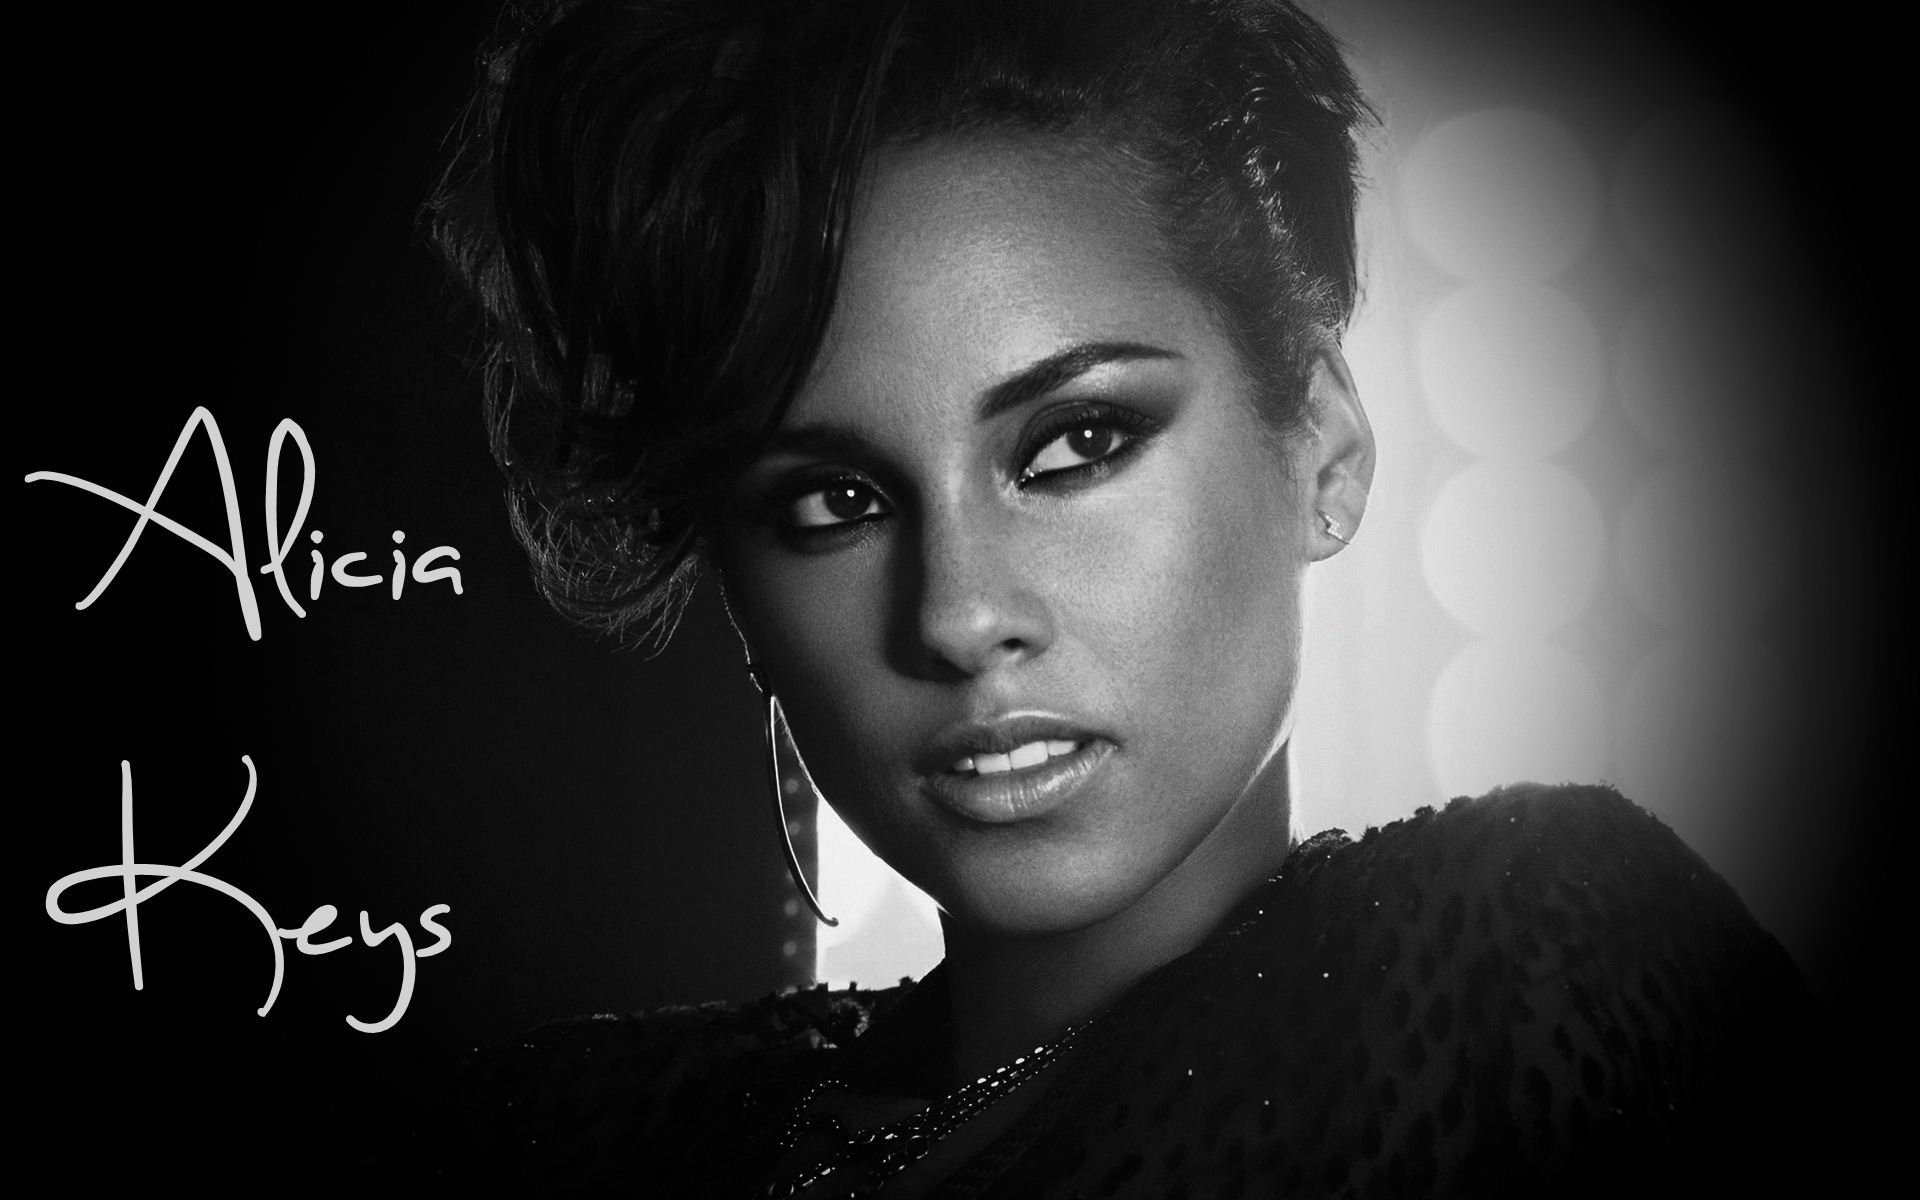 Music Alicia Keys HD Wallpaper Background Image.